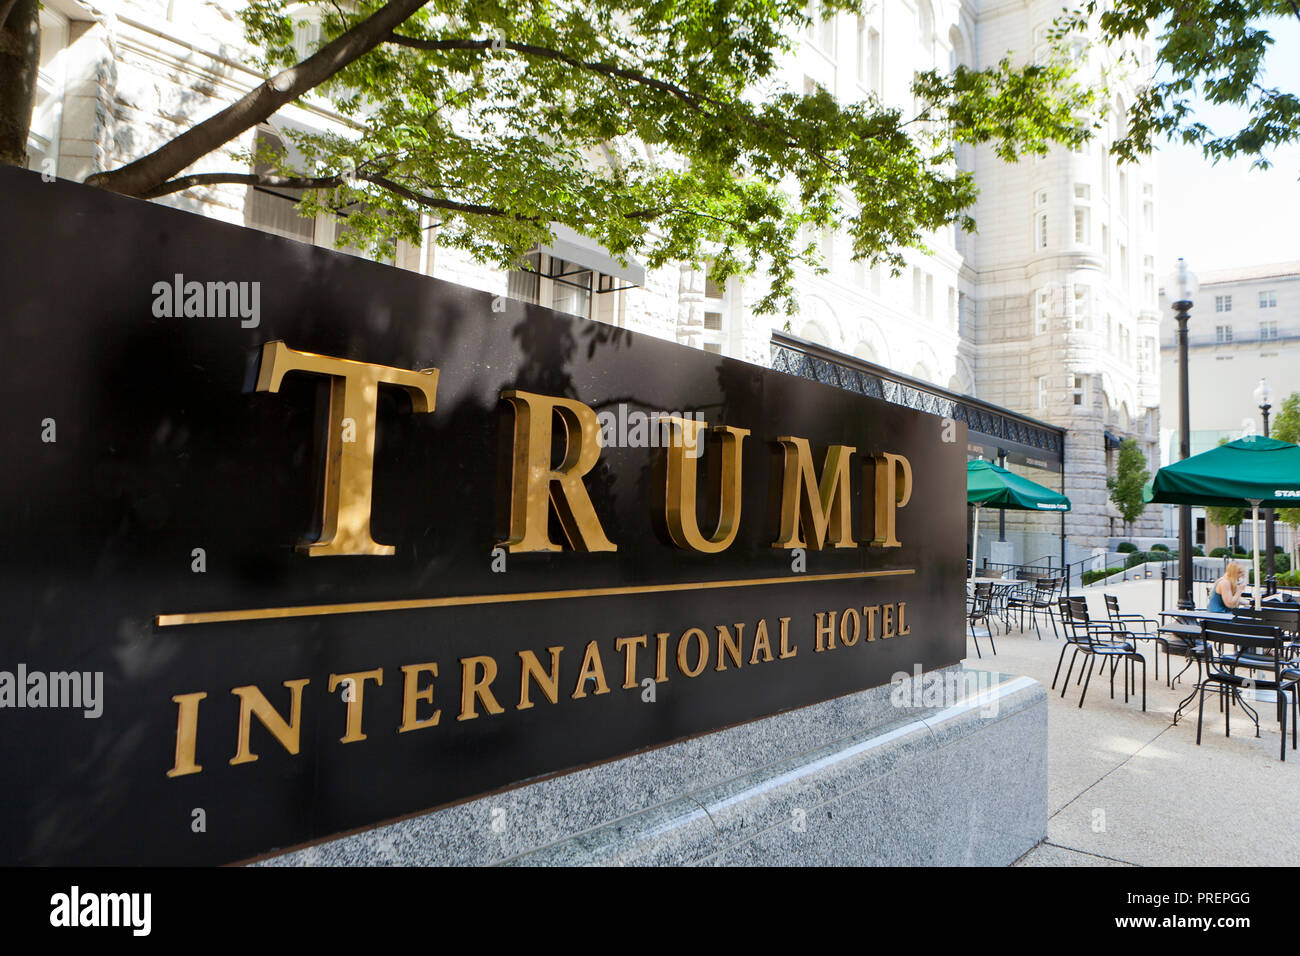 Trump International Hotel sign - Washington, DC USA Stock Photo